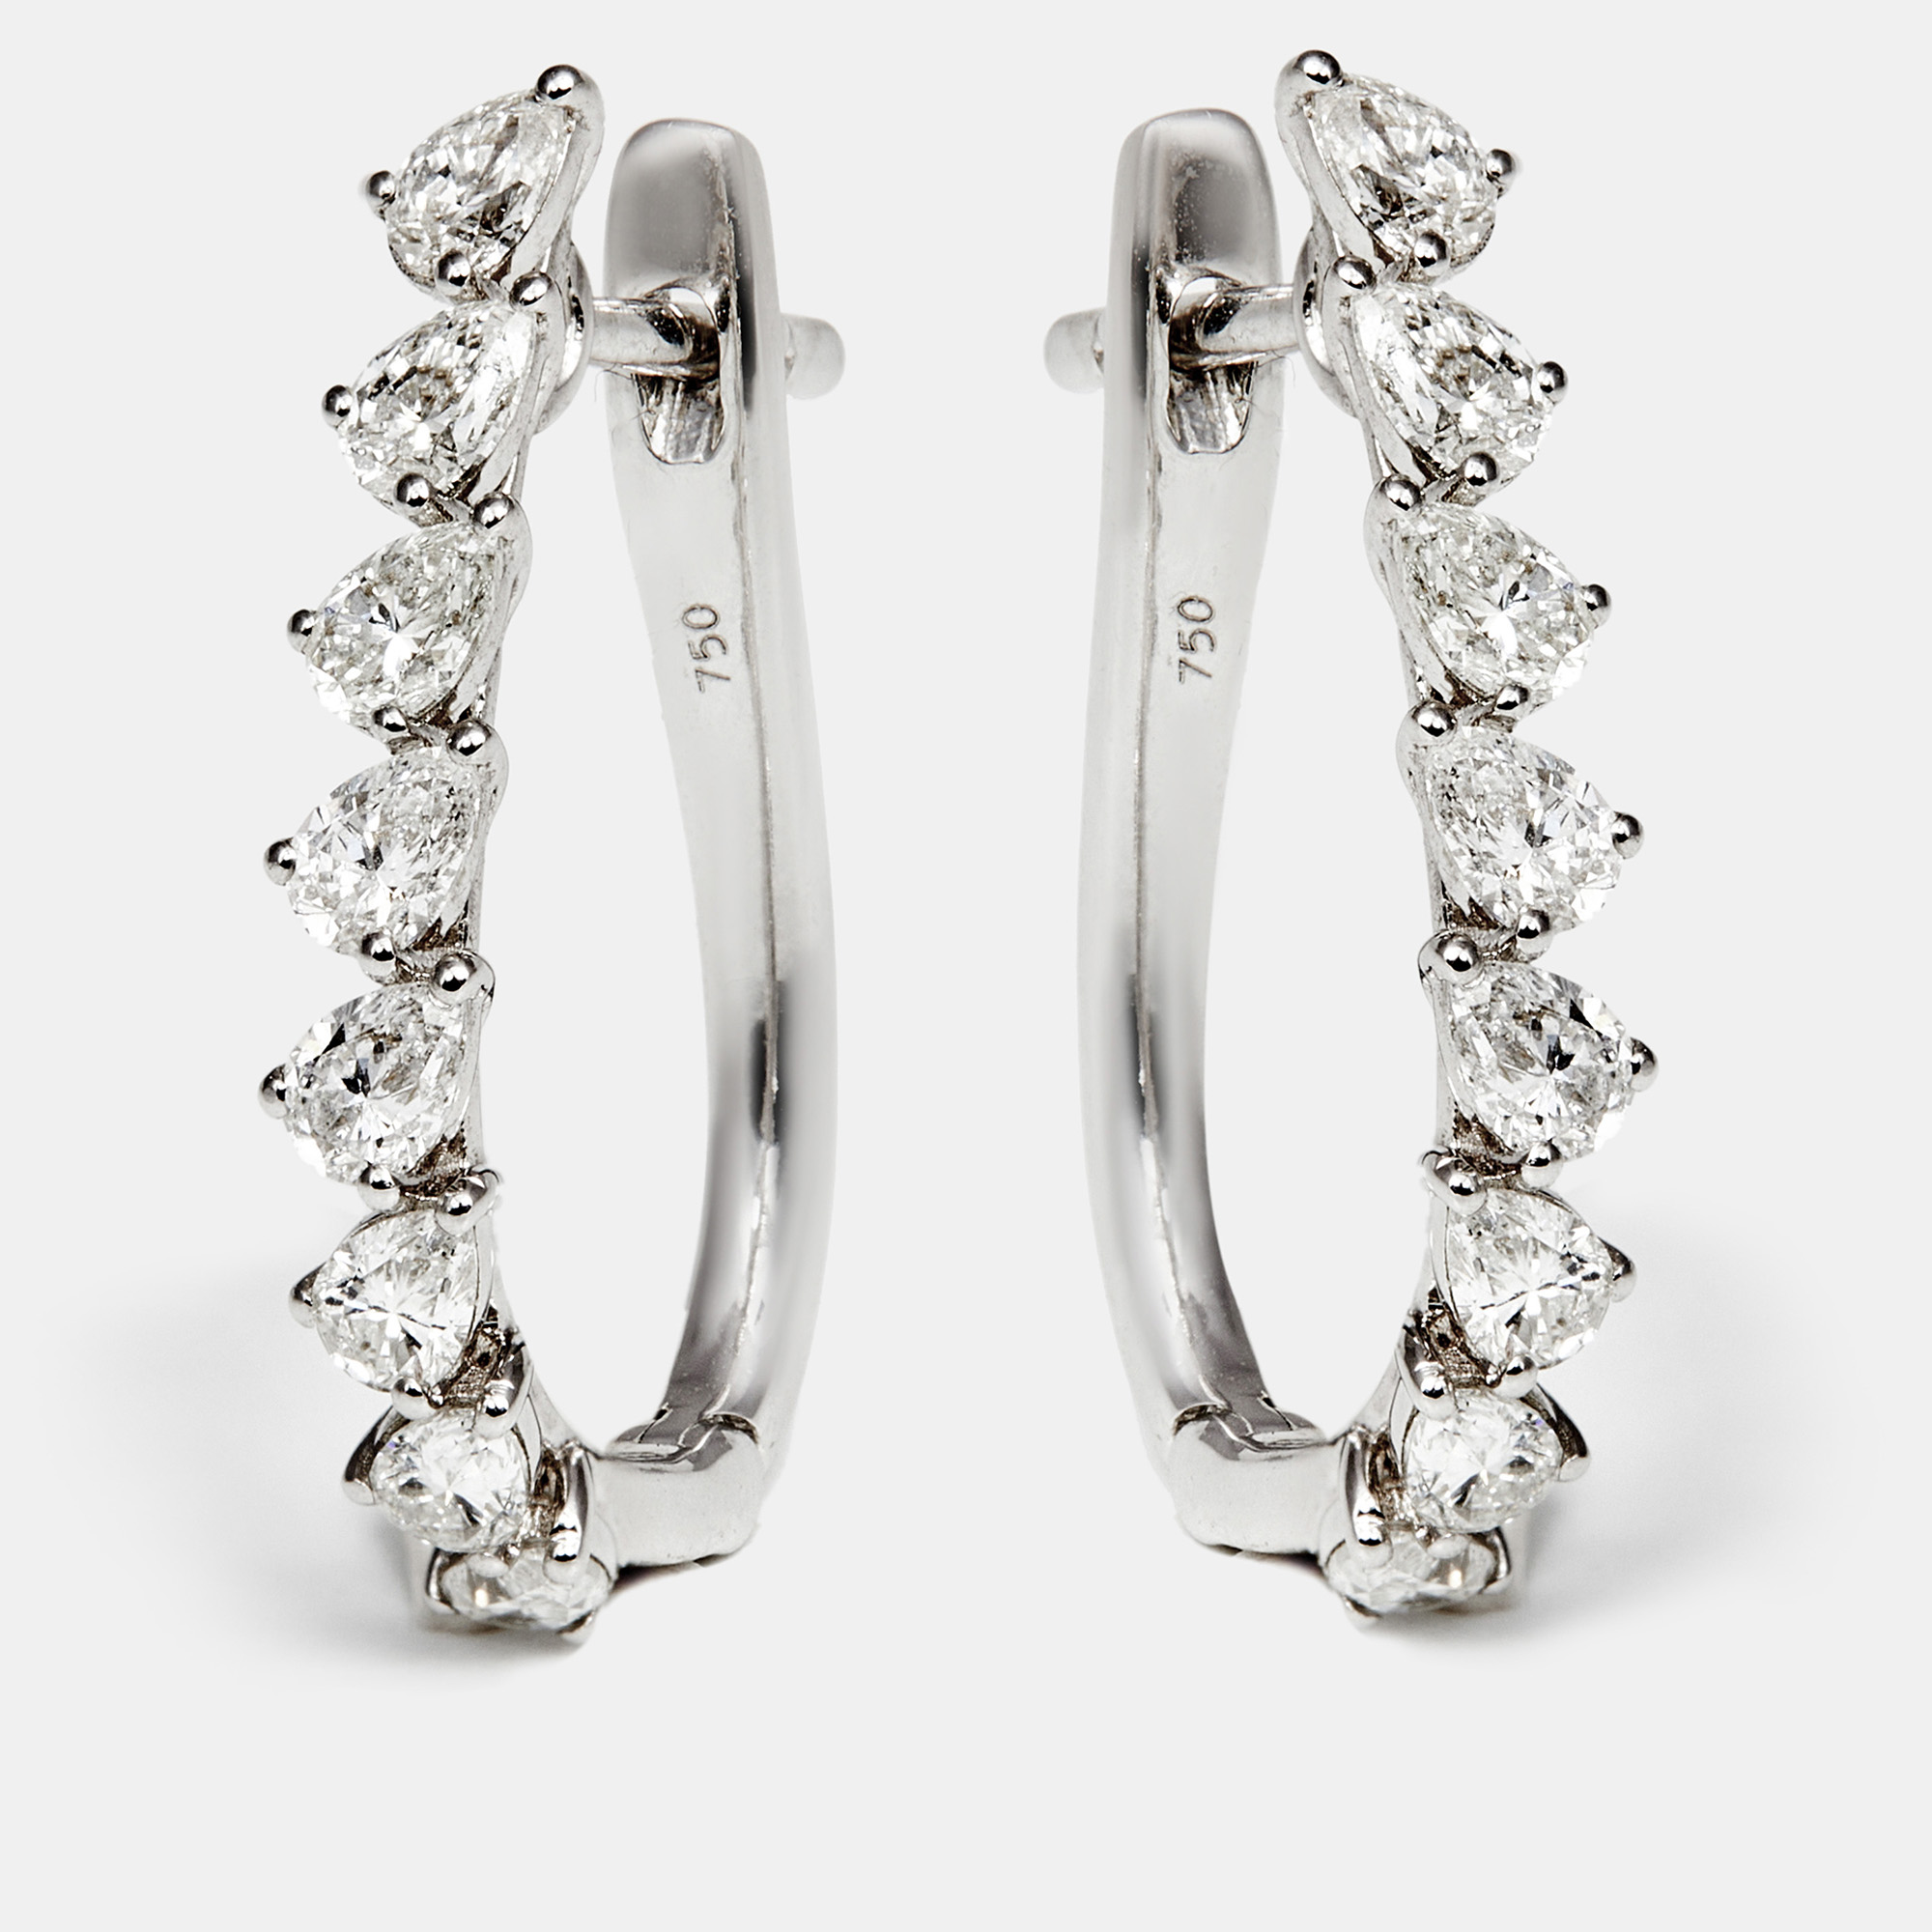 The diamond edit daily wear pear cut diamond 0.58 cts 18k white gold earrings